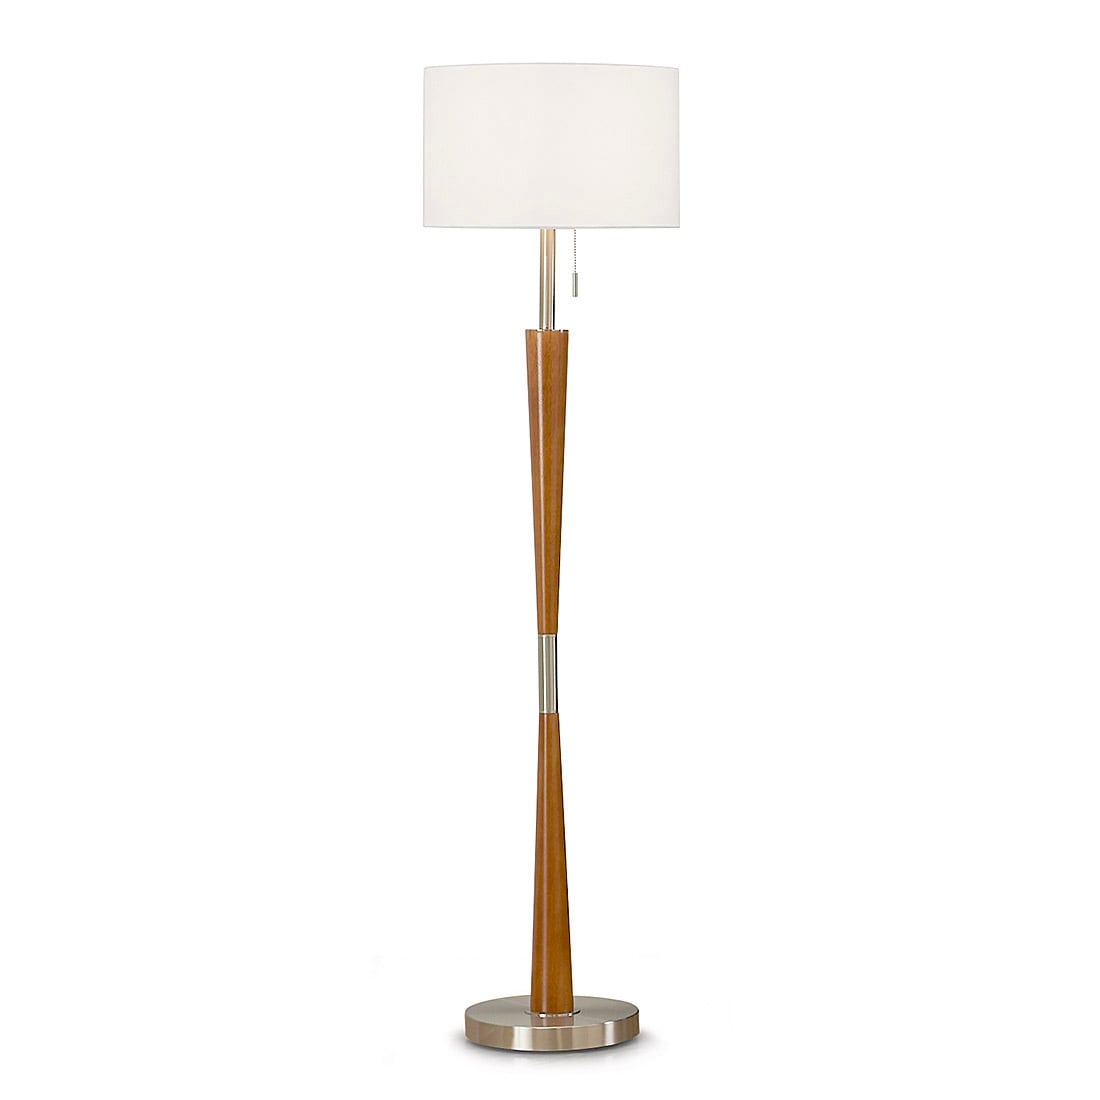 HOMEGLAM Century 61H Wood Floor lamp - On Sale - Bed Bath & Beyond -  32253102